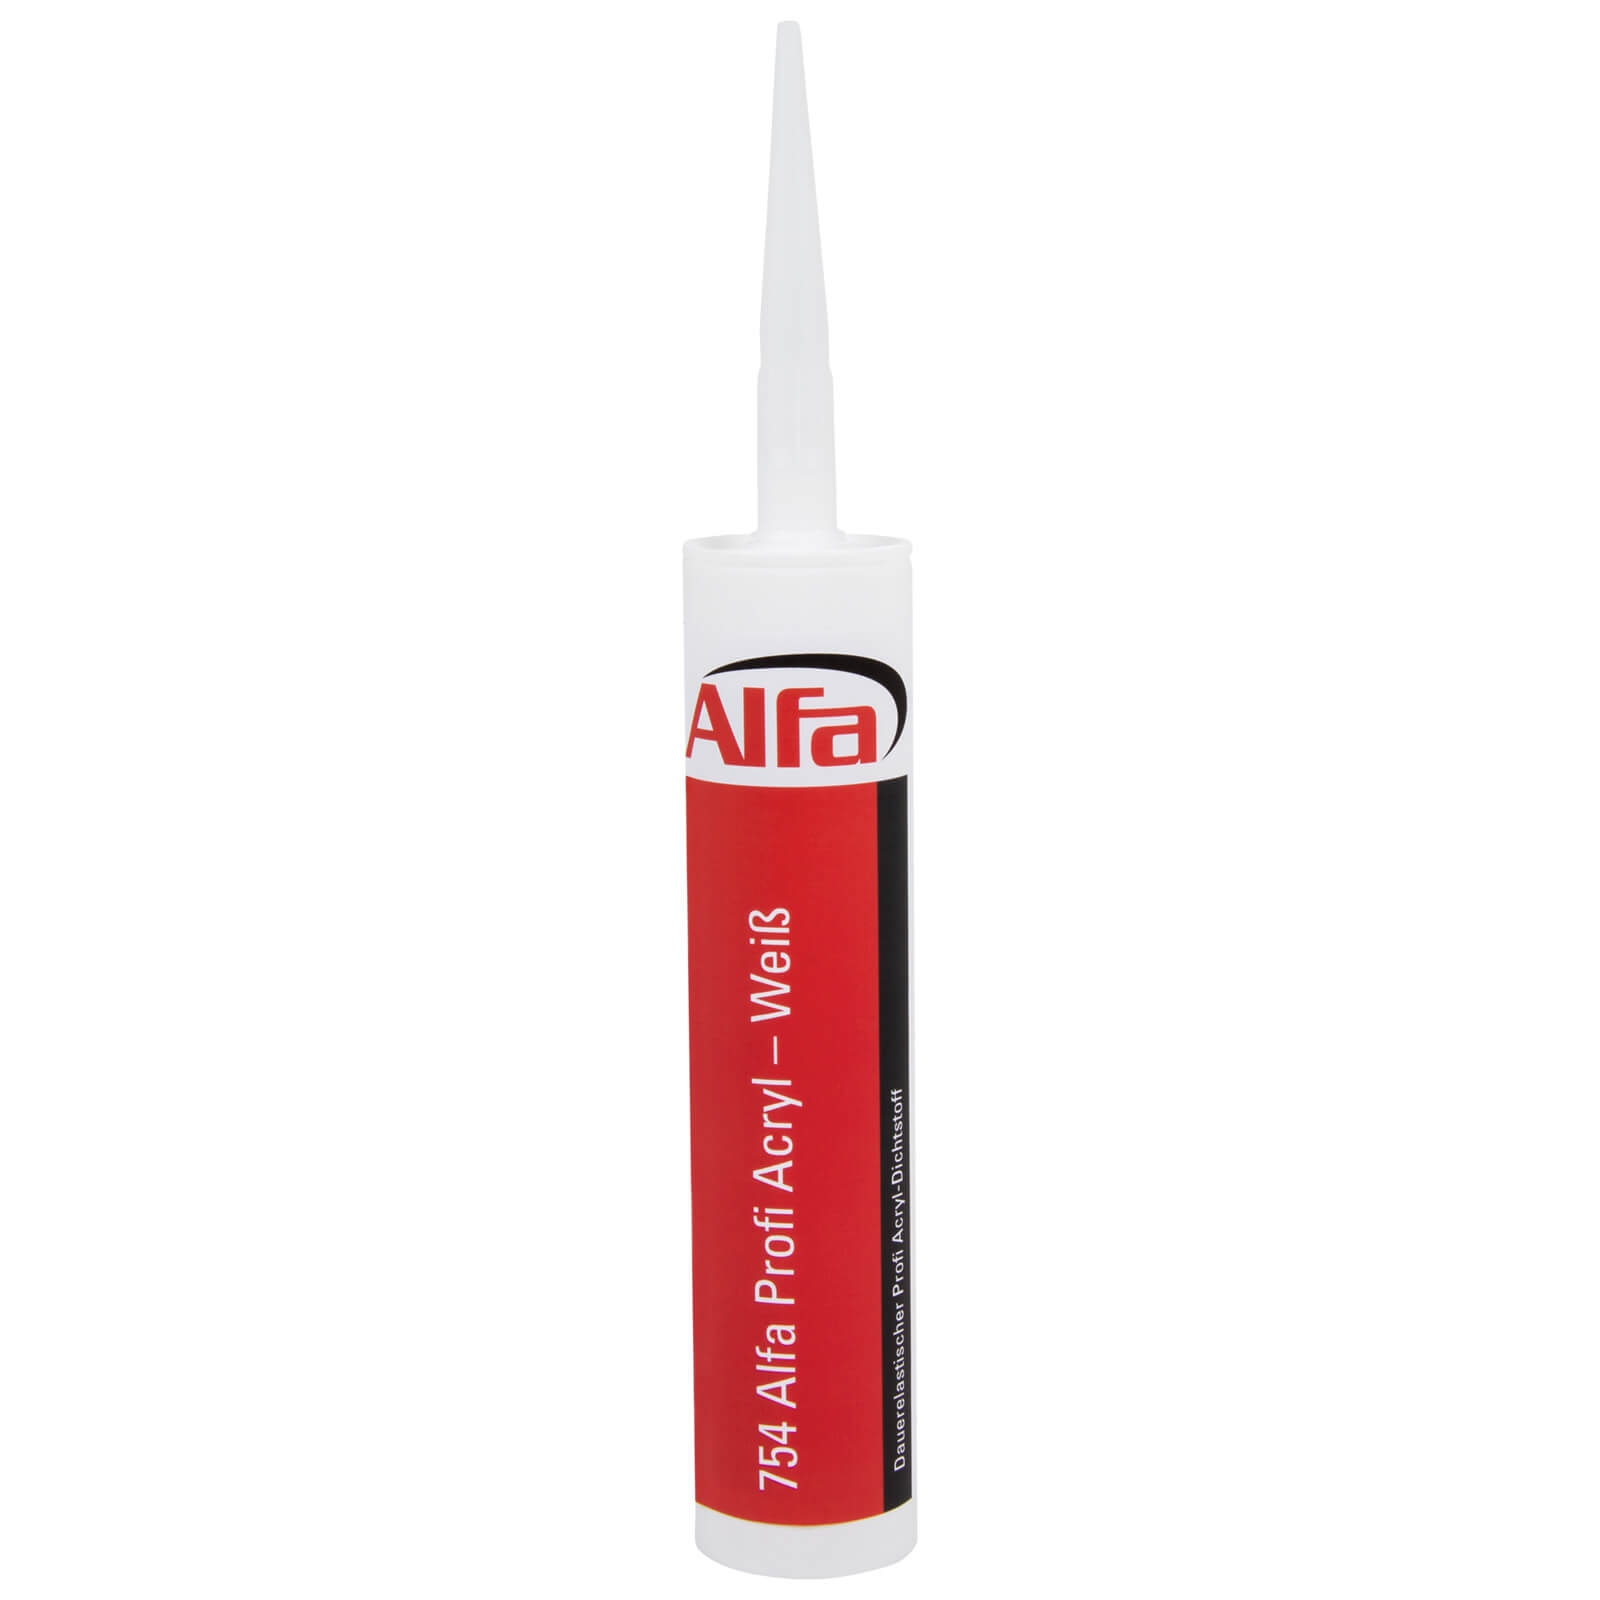 851 ALFA - Silicone-acrylique blanc